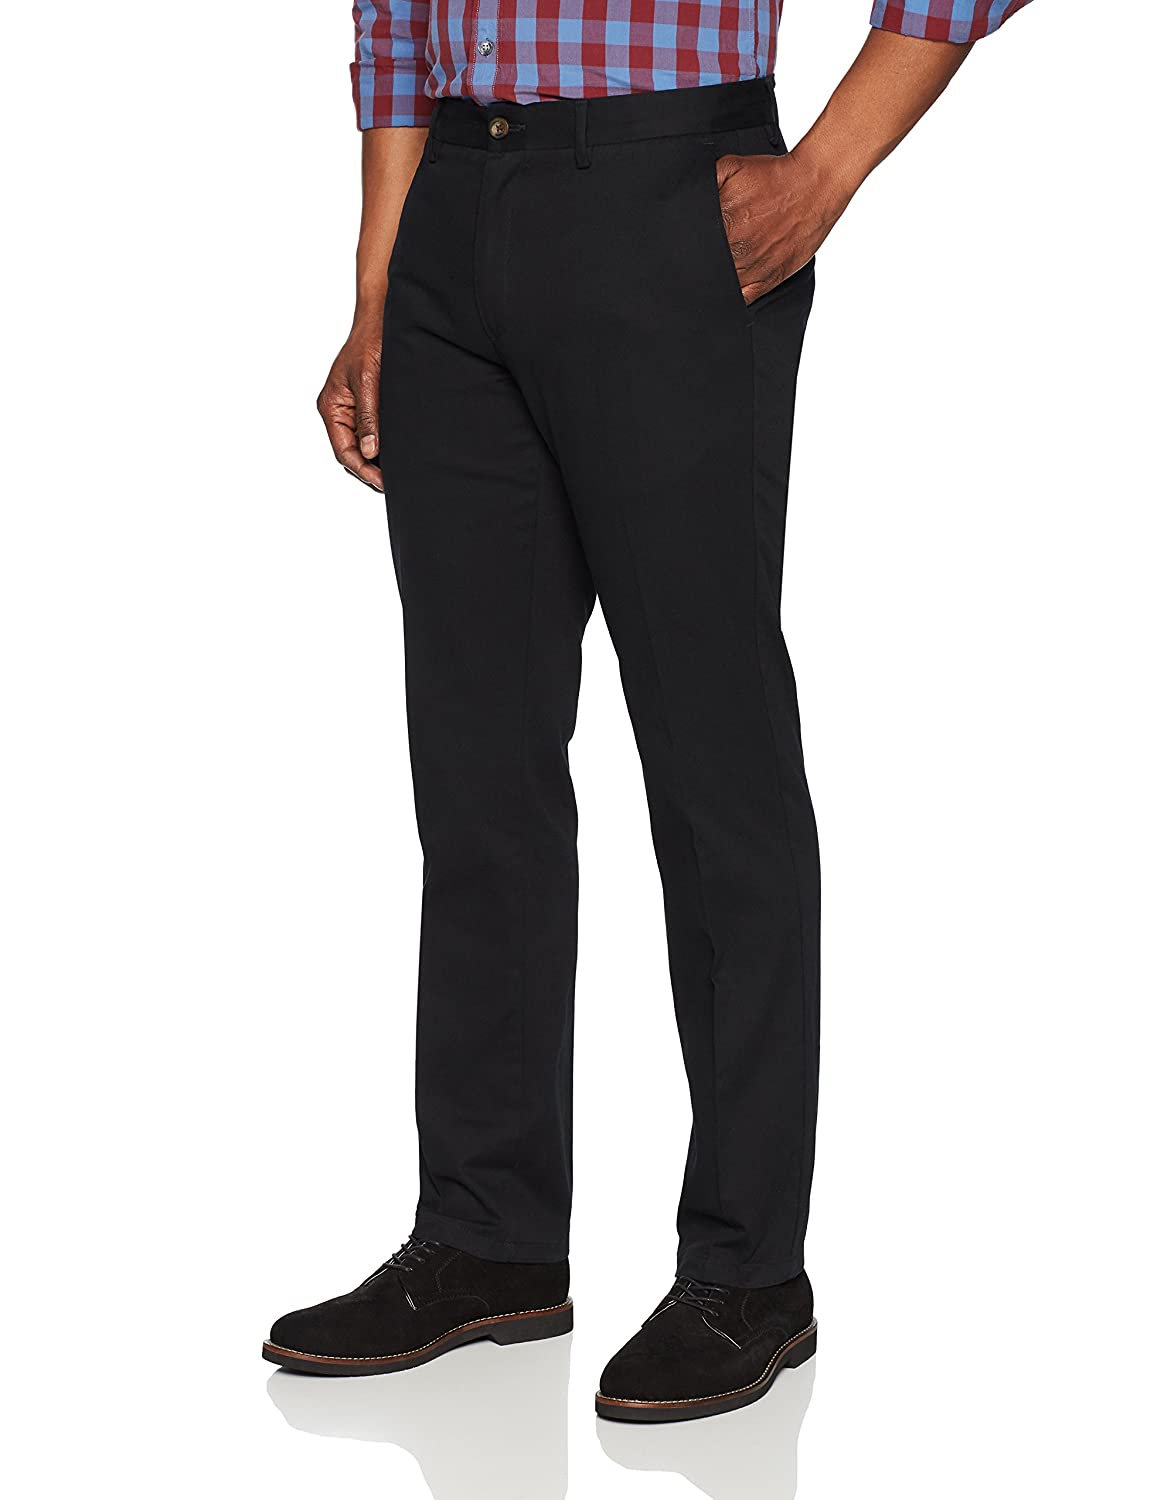 Essentials Men's Slim-Fit Wrinkle-Resistant, Black, Size 29W x 30L nn6R ...